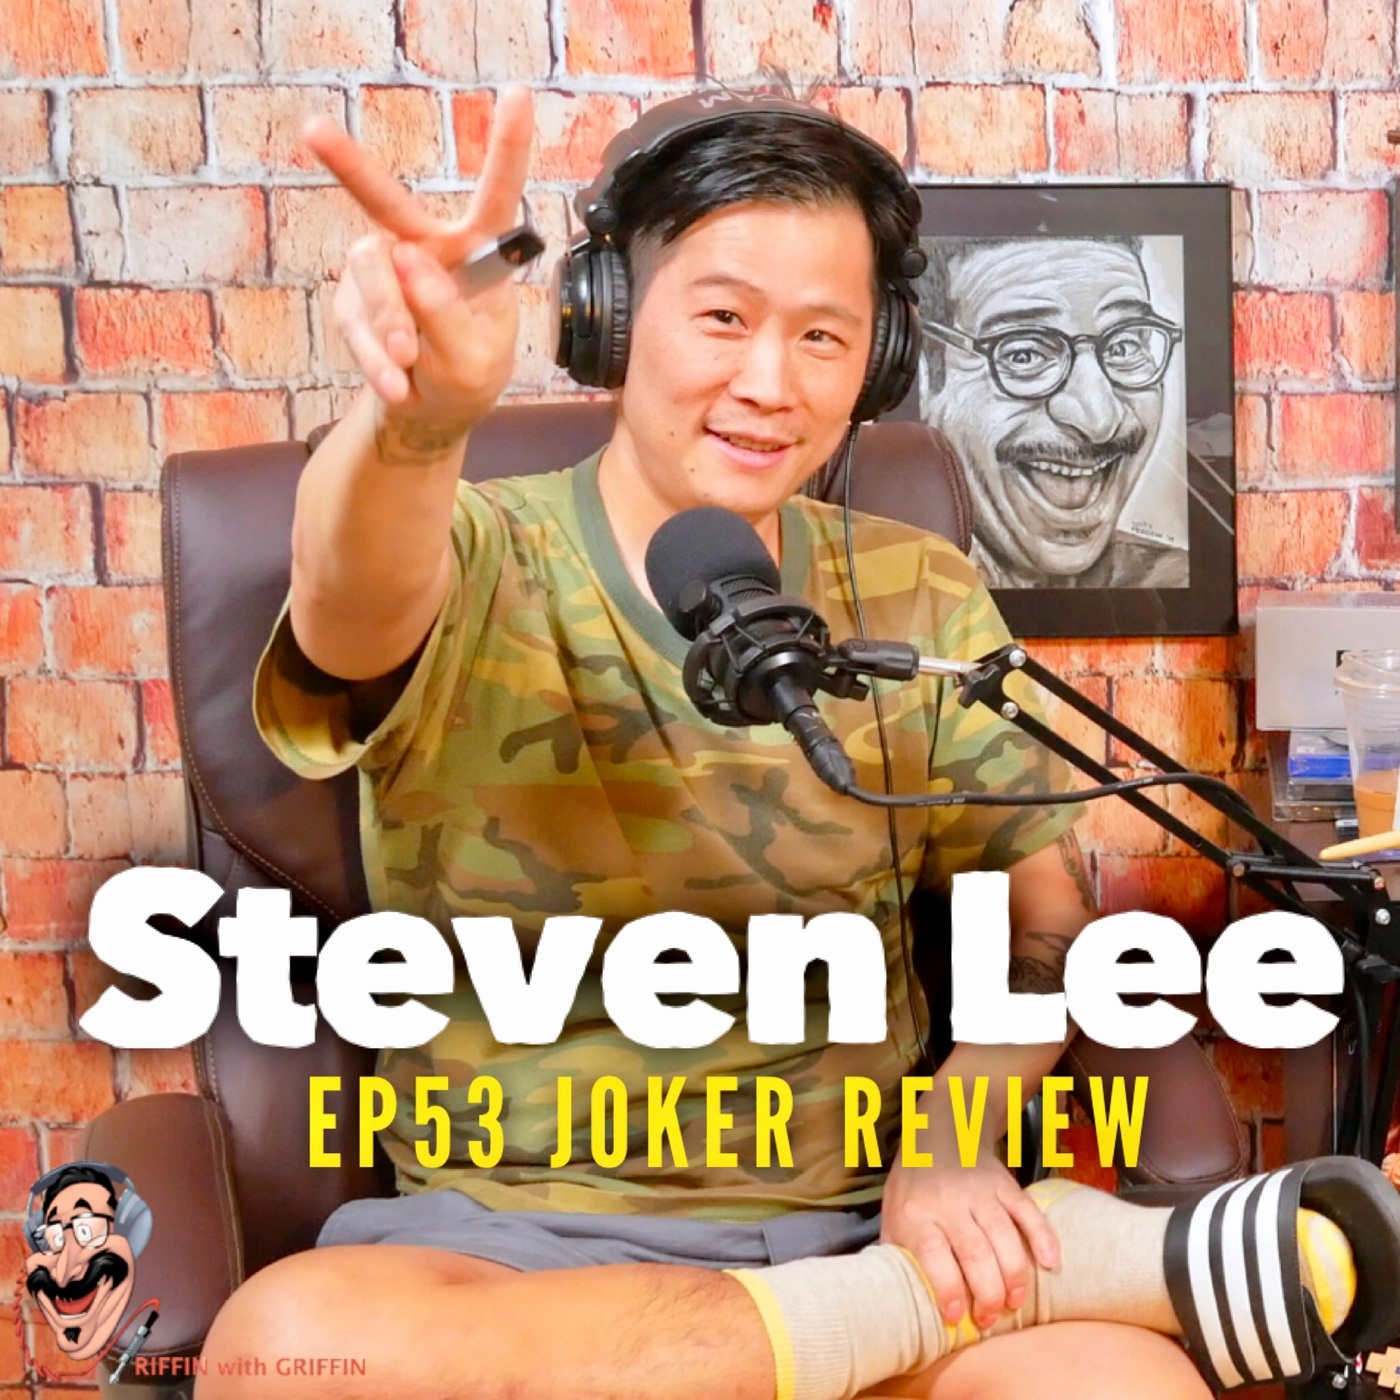 Steven Lee: Joker Review and More